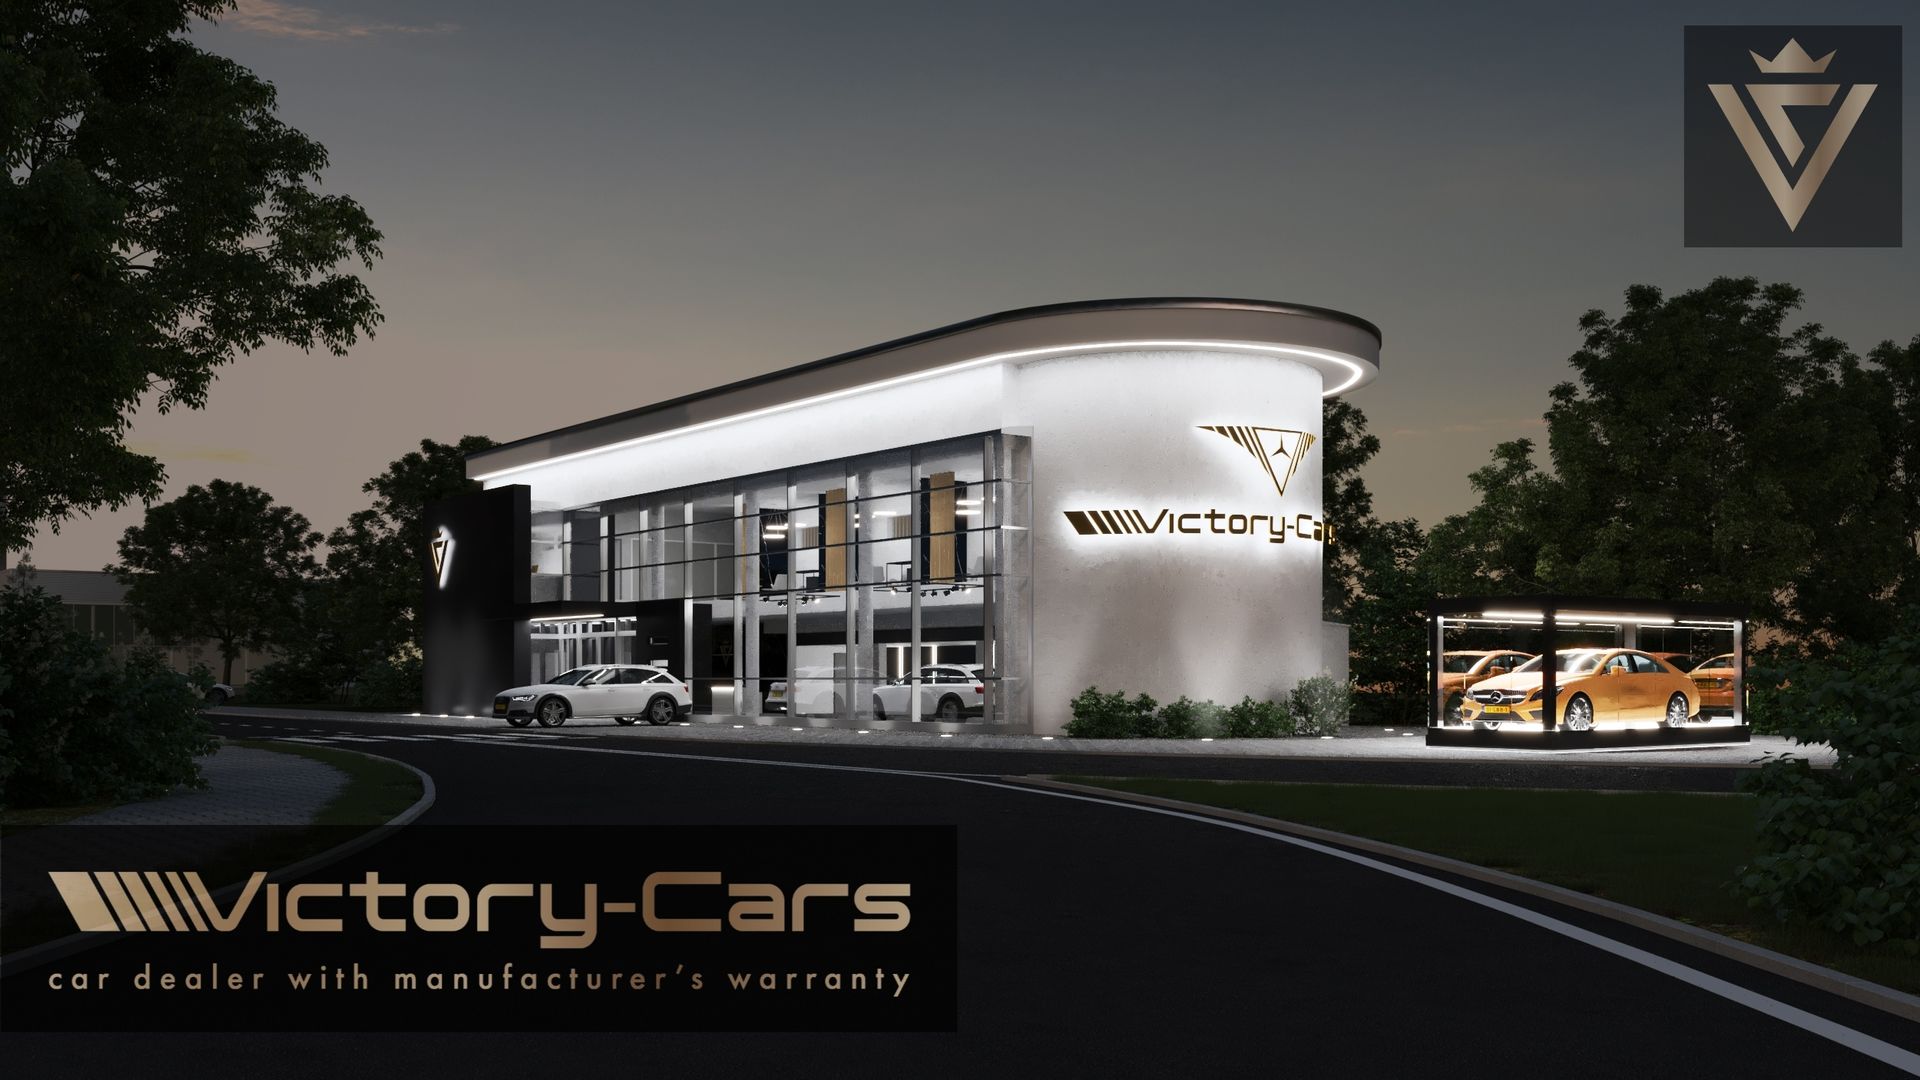 /// VICTORY-CARS /// - Car Dealer with Manufacturer's Warranty top banner